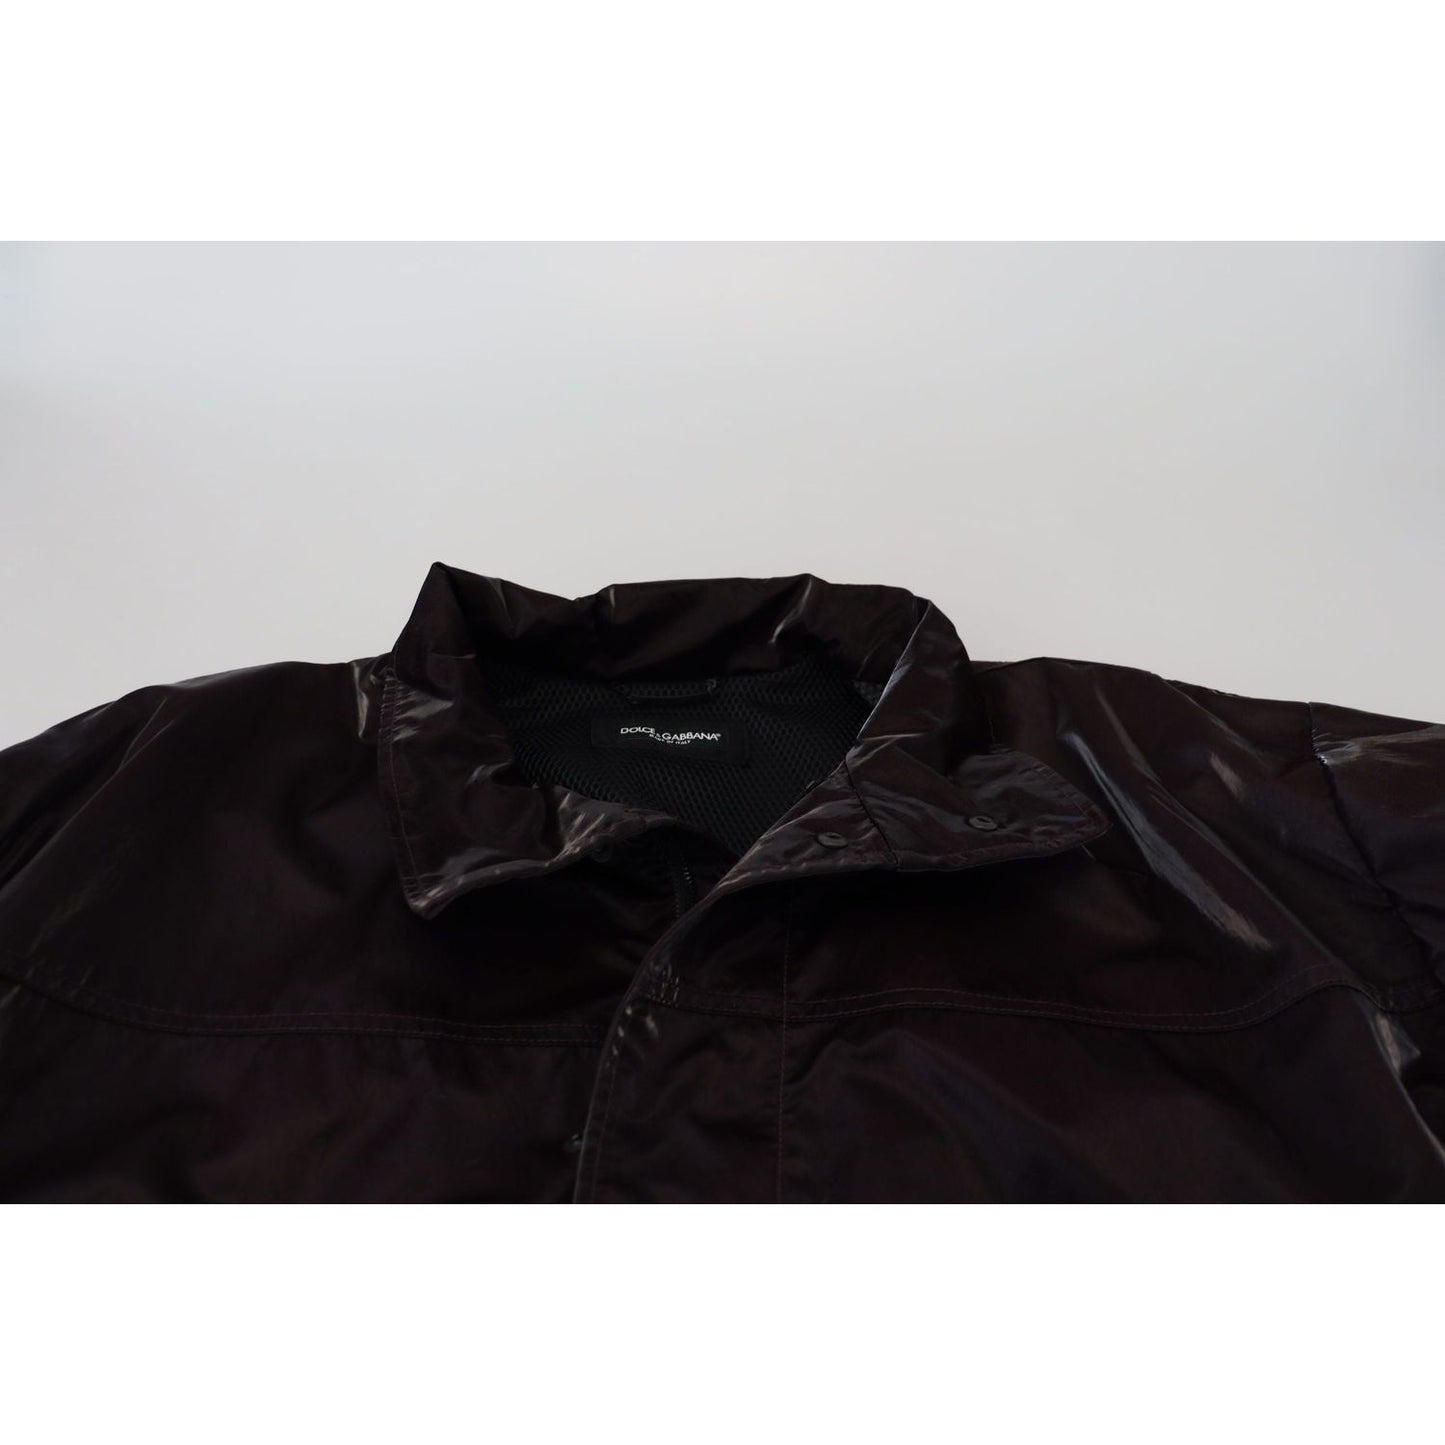 Dolce & Gabbana Elegant Bordeaux Collared Jacket bordeaux-nylon-collared-men-coat-jacket